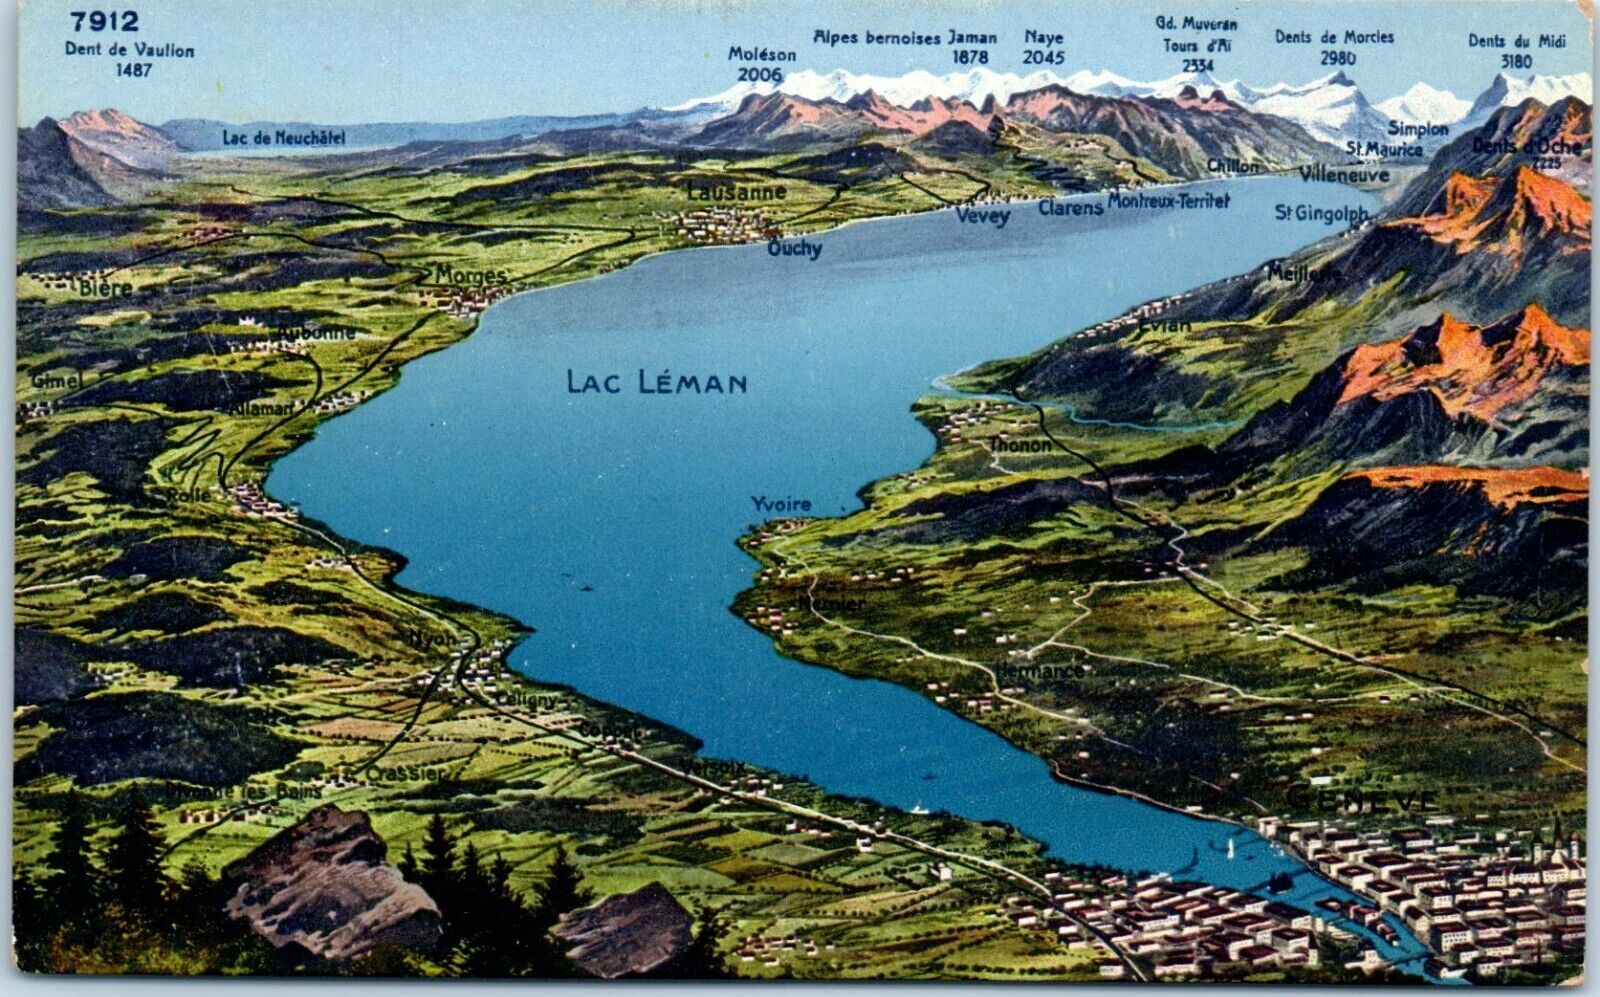 Lac Leman Switzerland/France Map Postcard